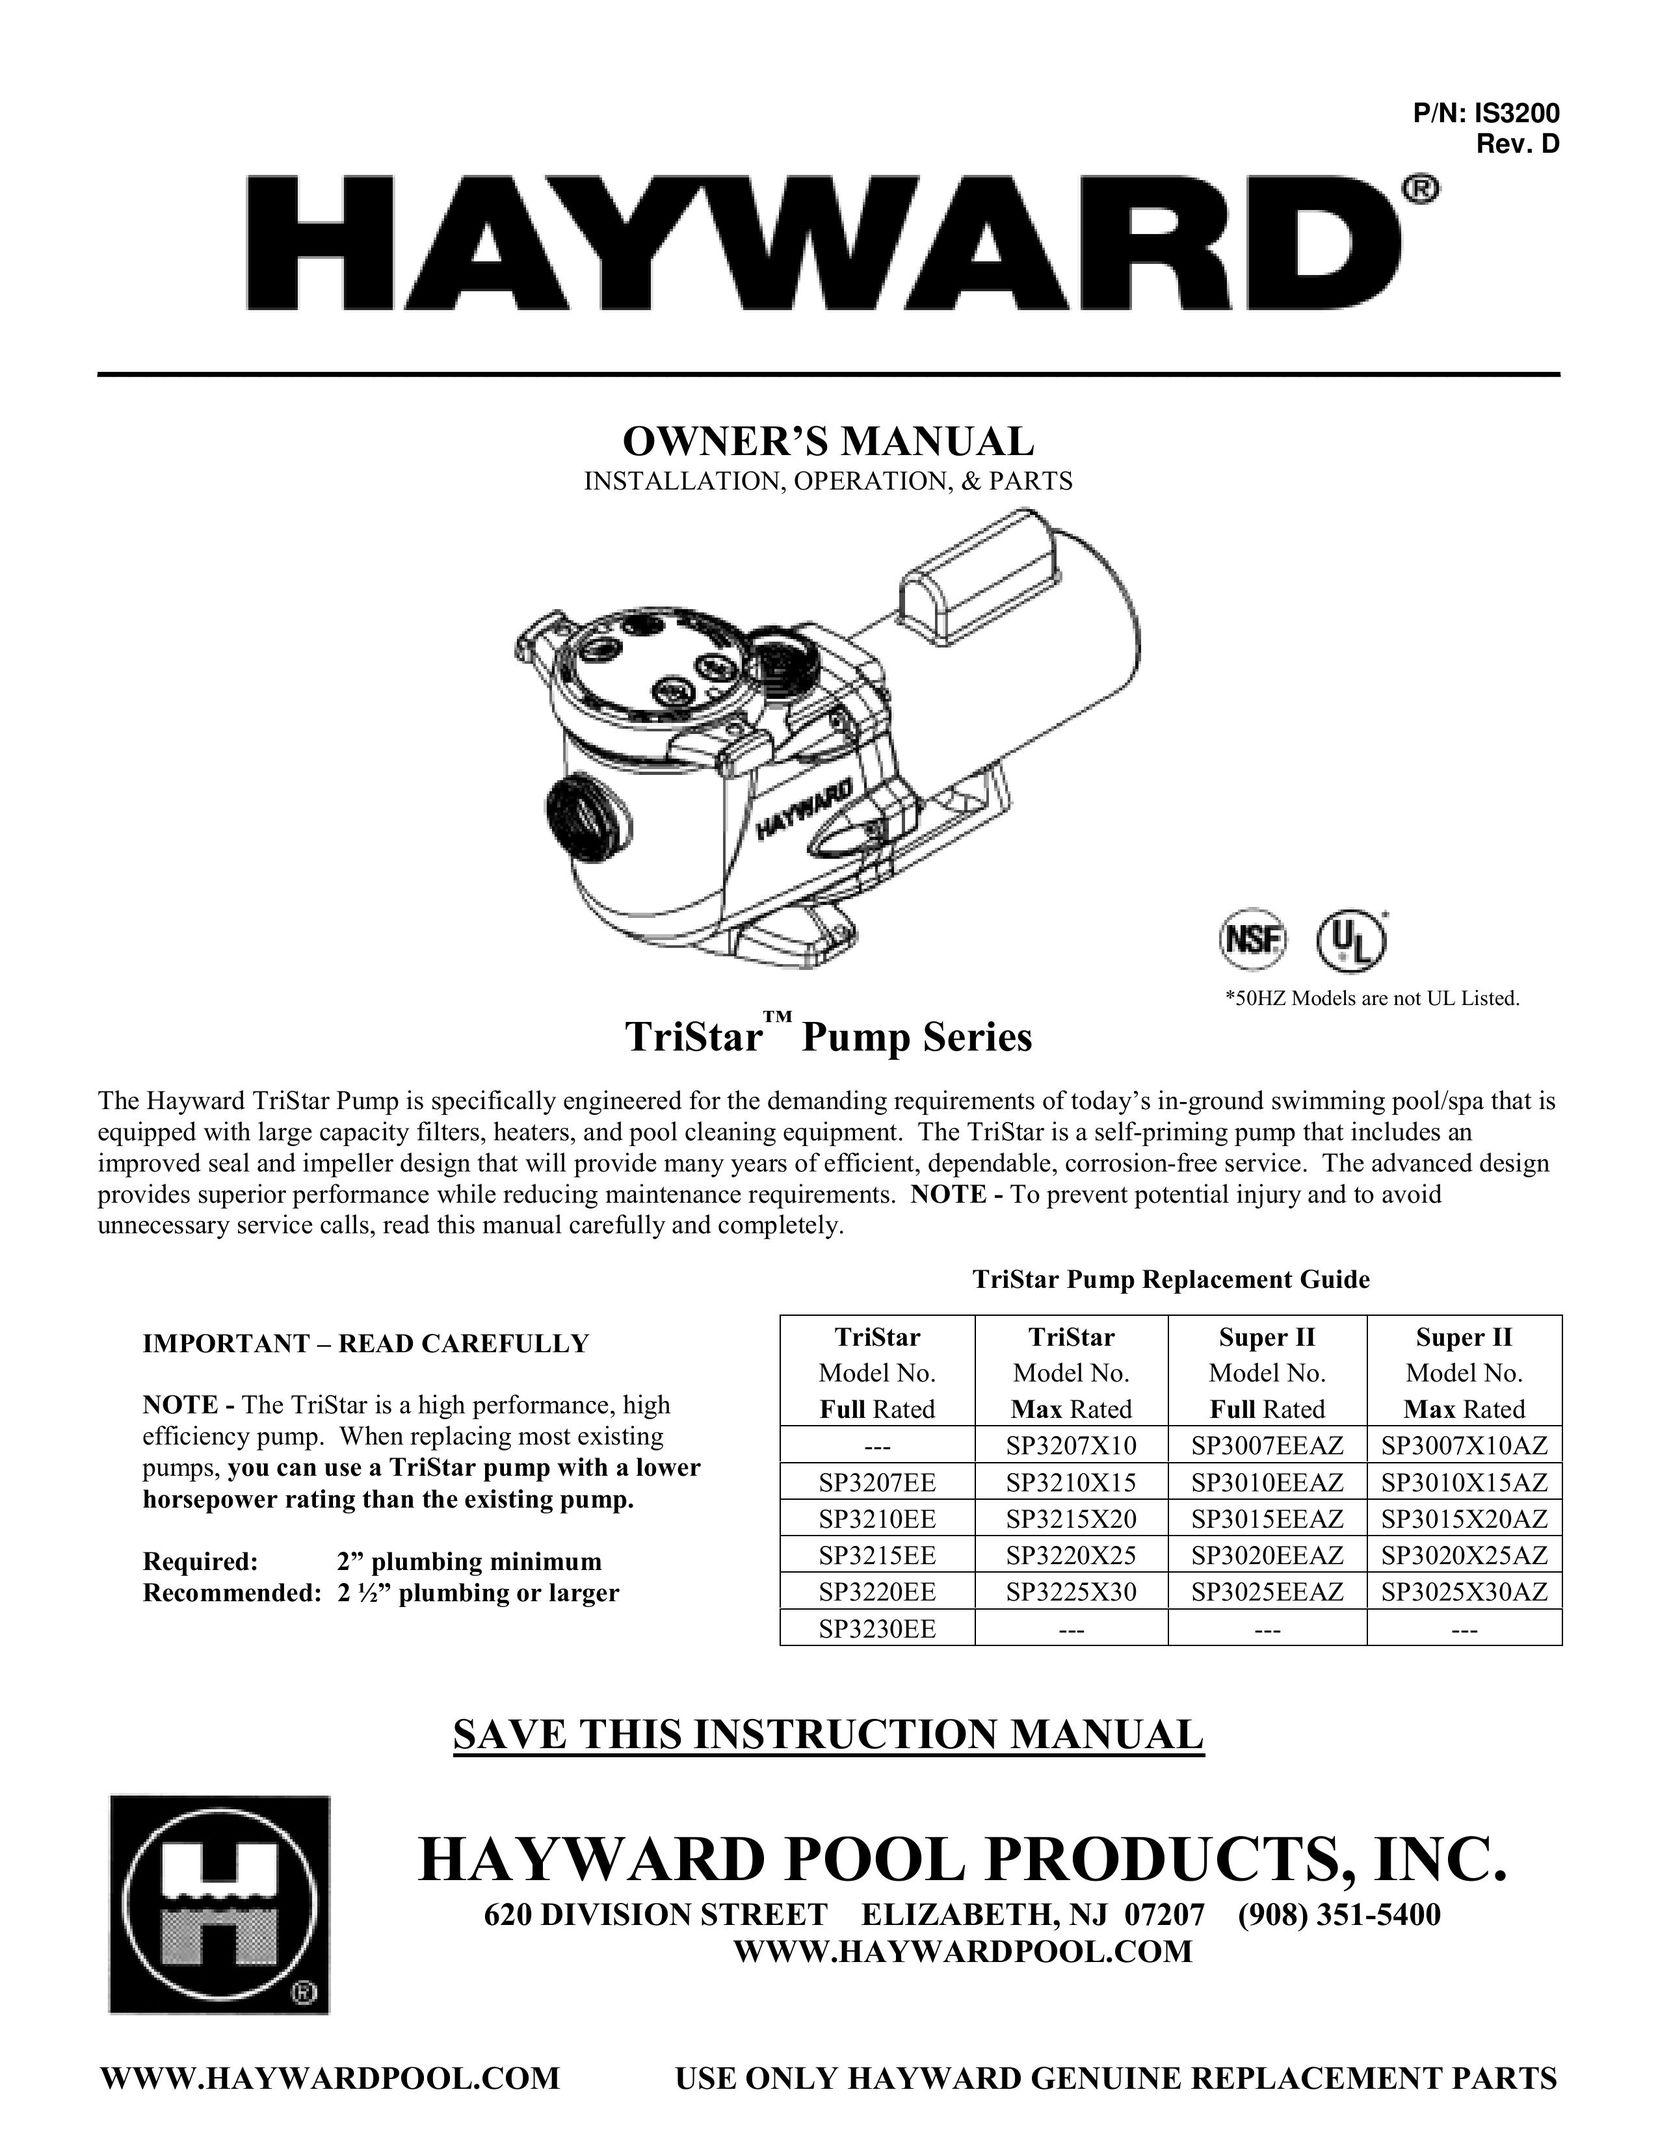 TriStar SP3007EEAZ Heat Pump User Manual